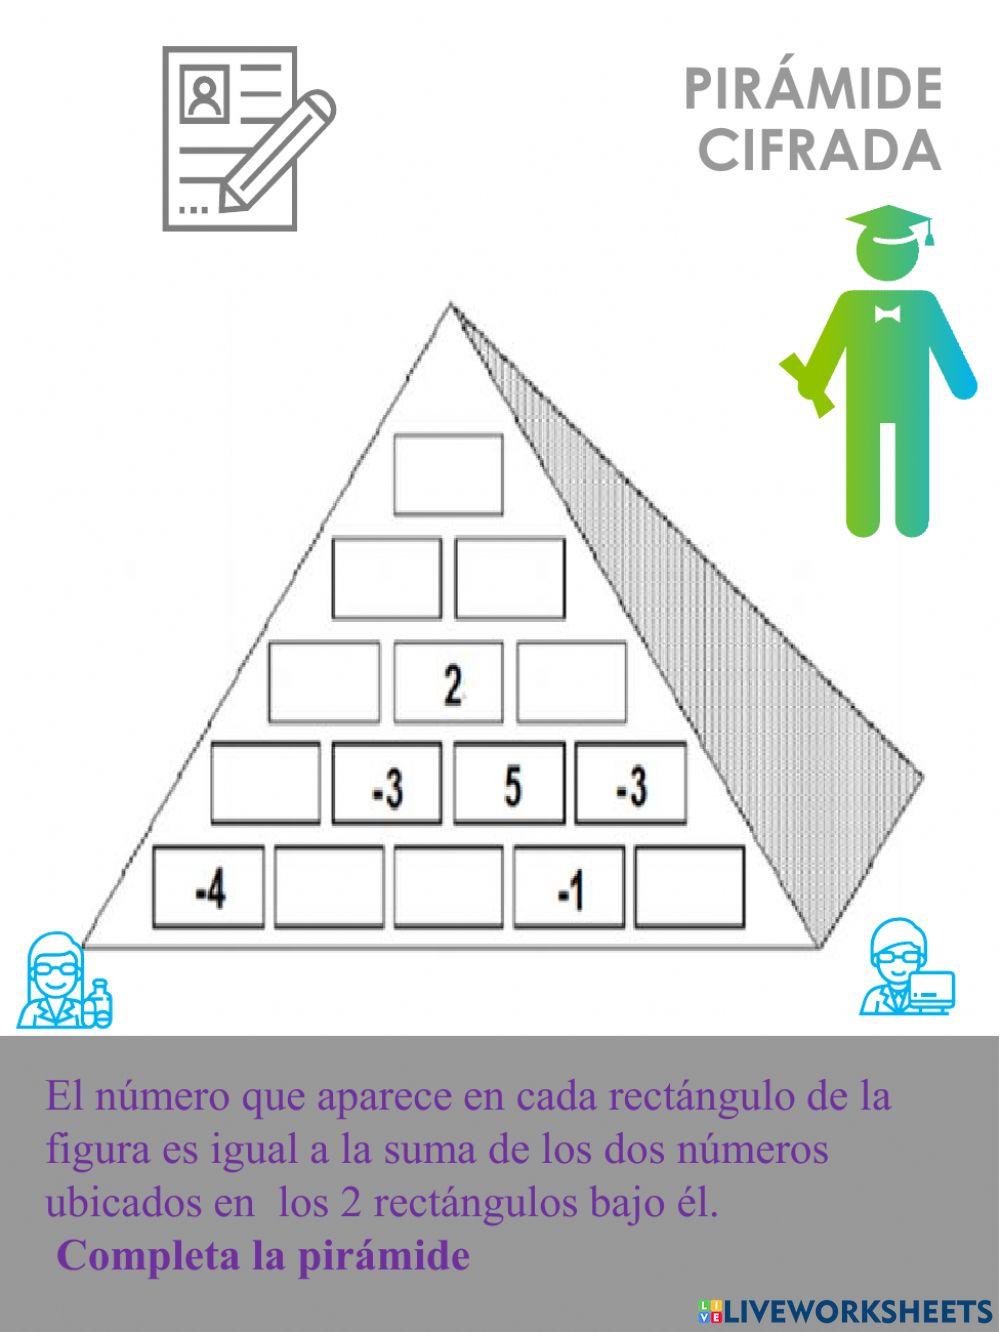 Pirámide cifrada